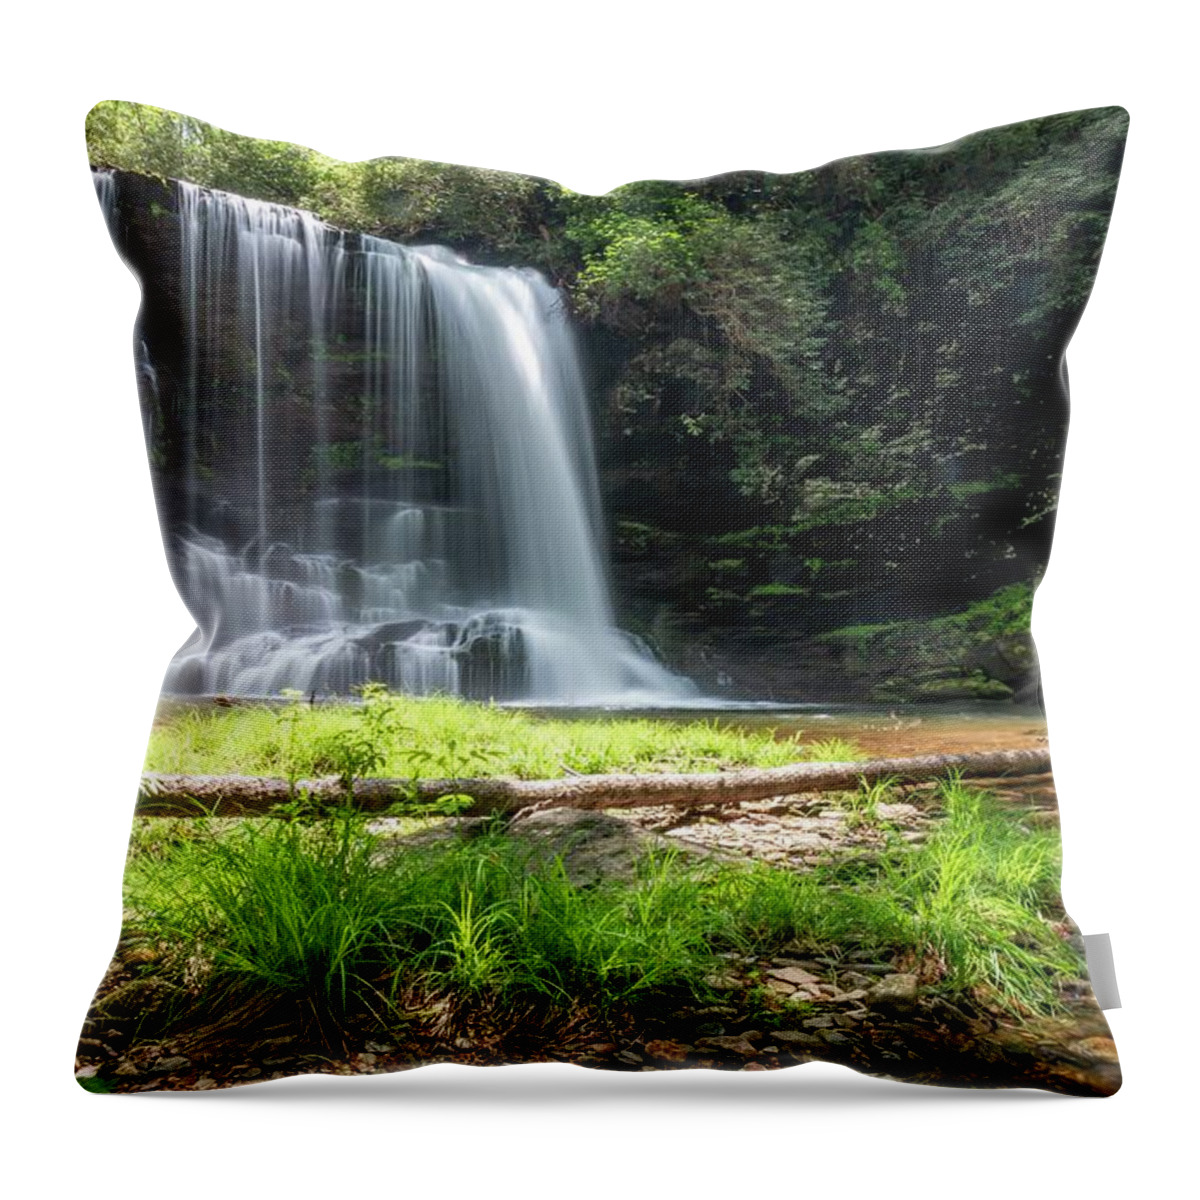 Landscape Throw Pillow featuring the photograph Lower Bearwallow Falls by Chris Berrier